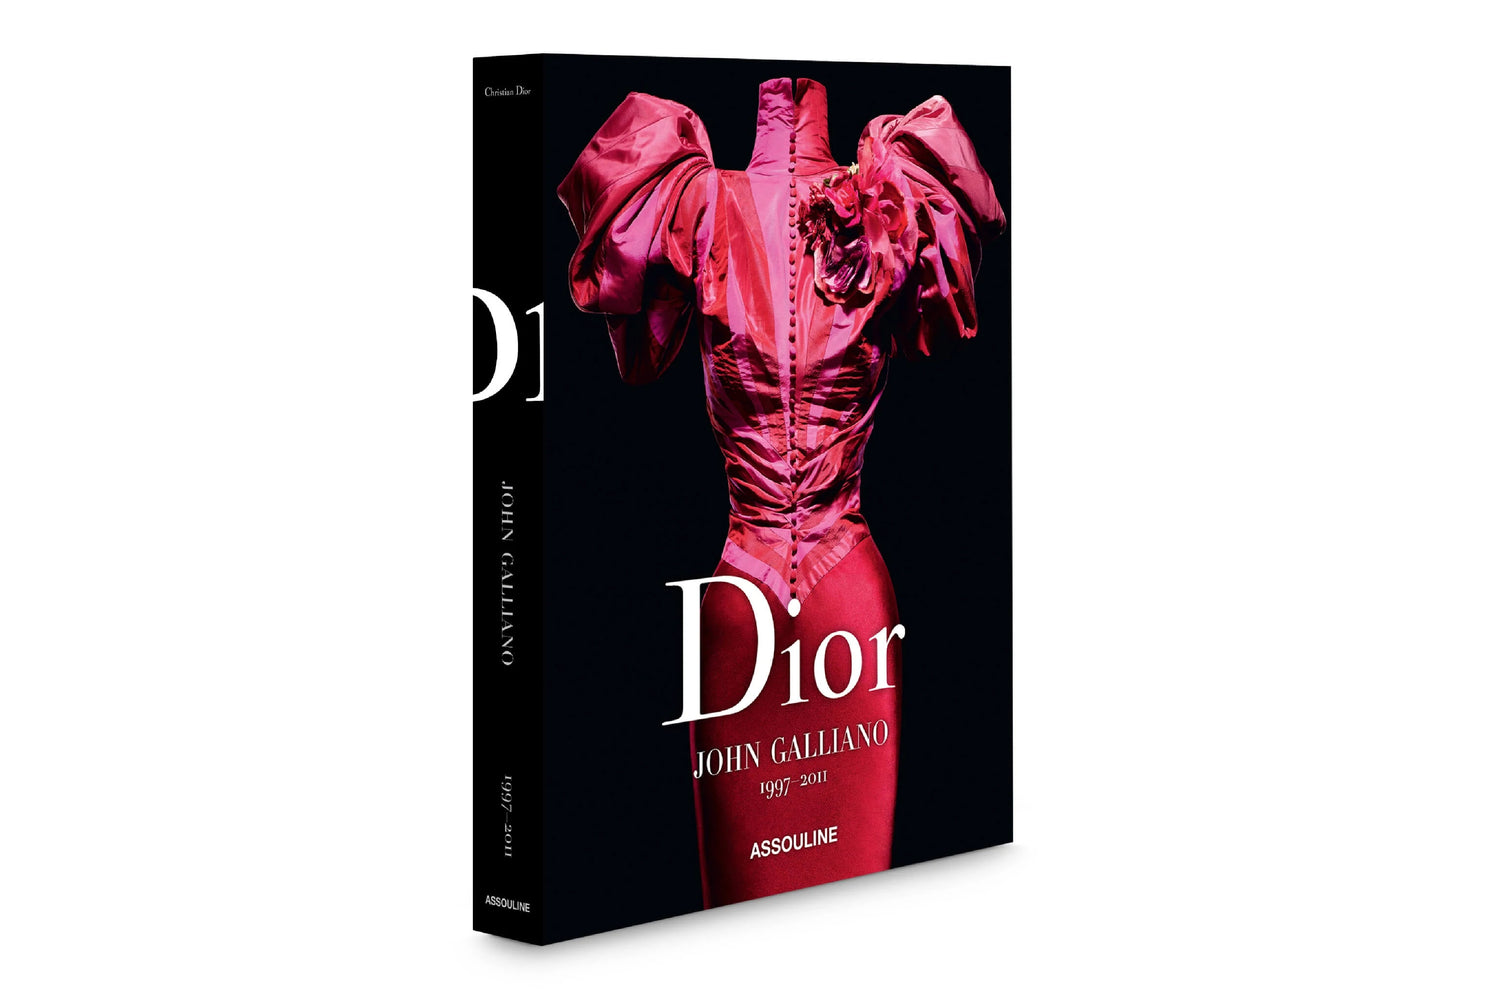 2004 Christian Dior by John Galliano Finally got my hands on the Bosto